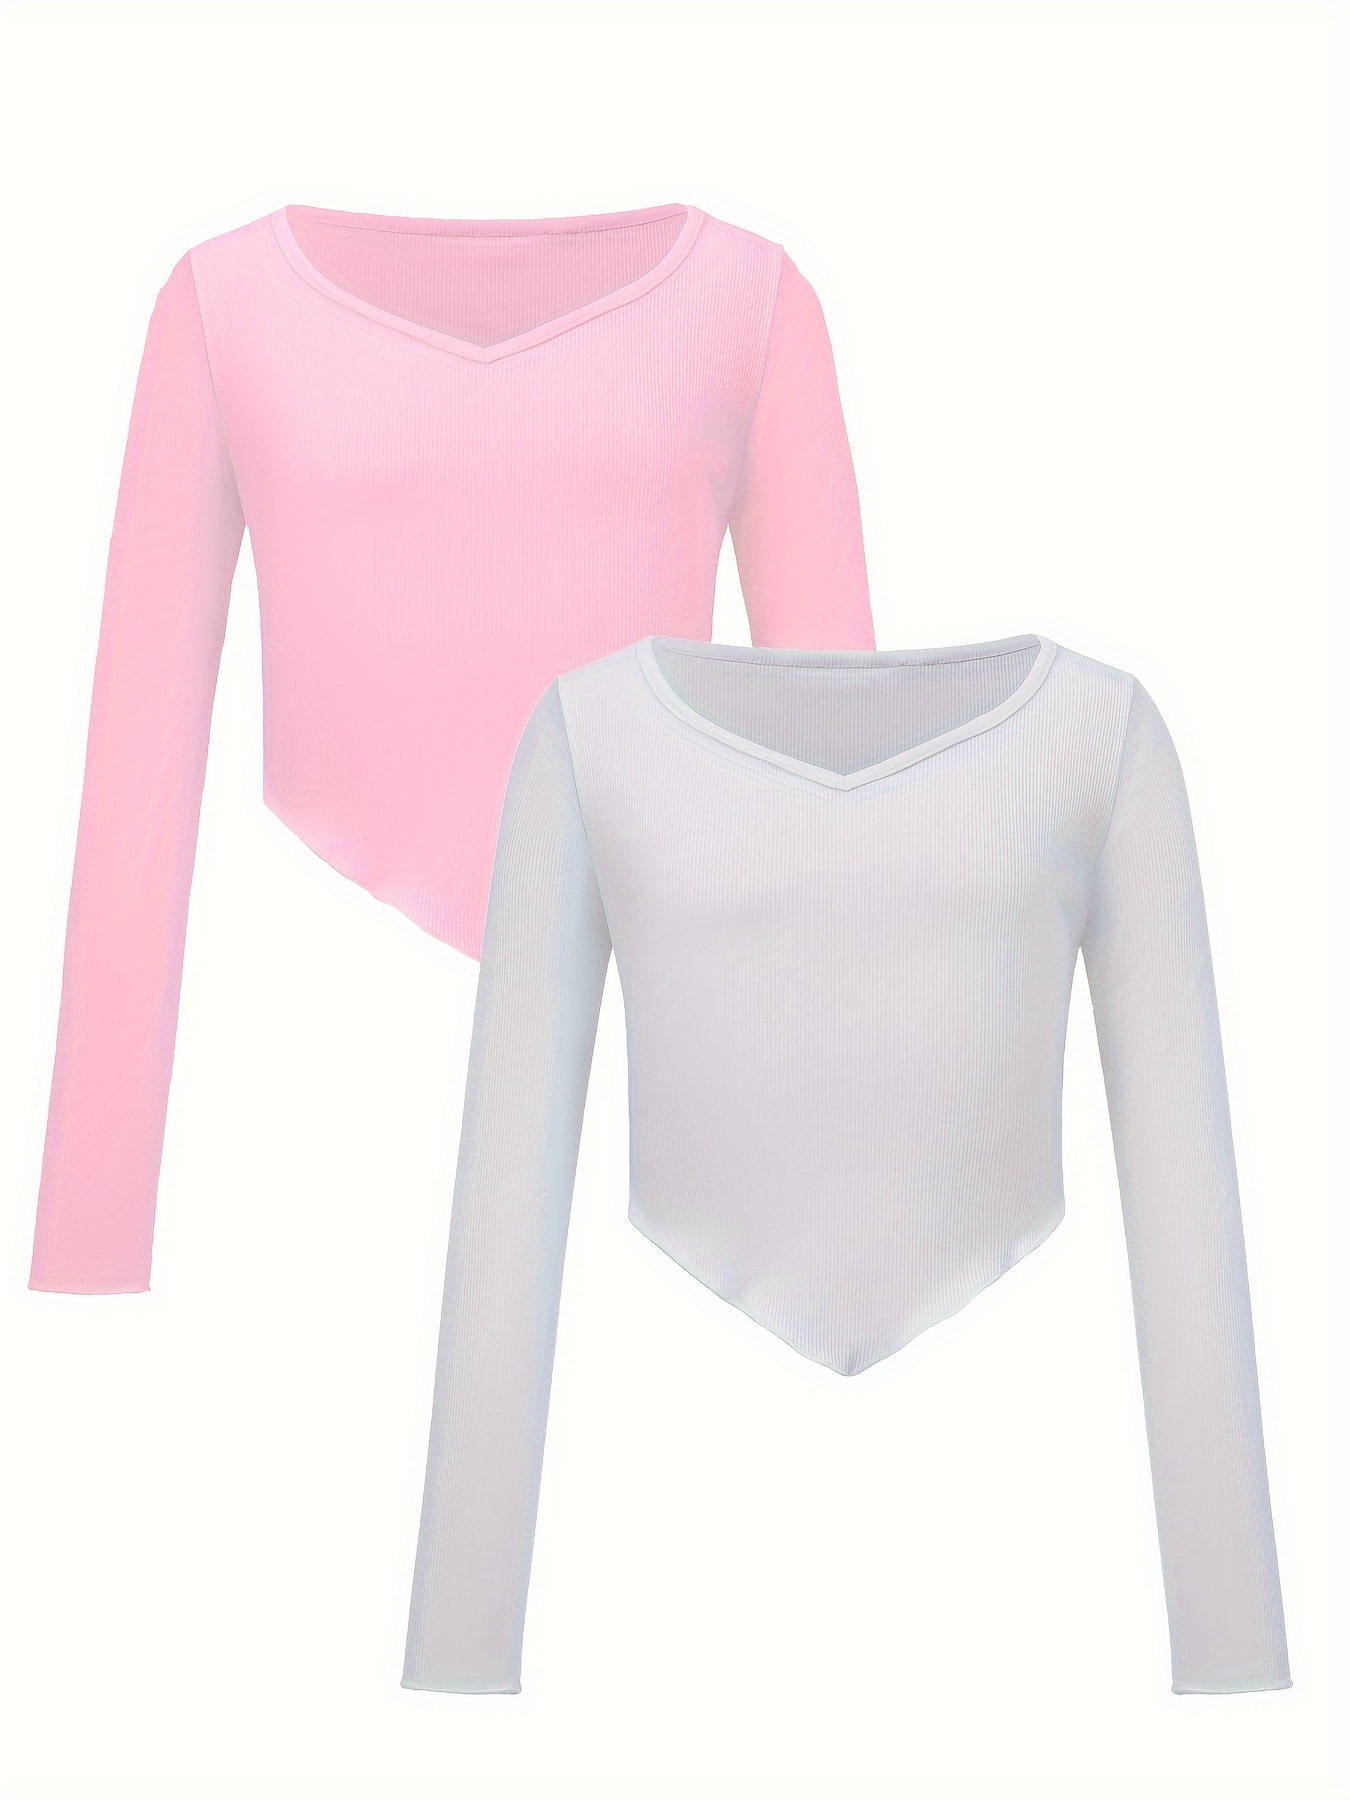 13+ Light Pink Gildan Shirt